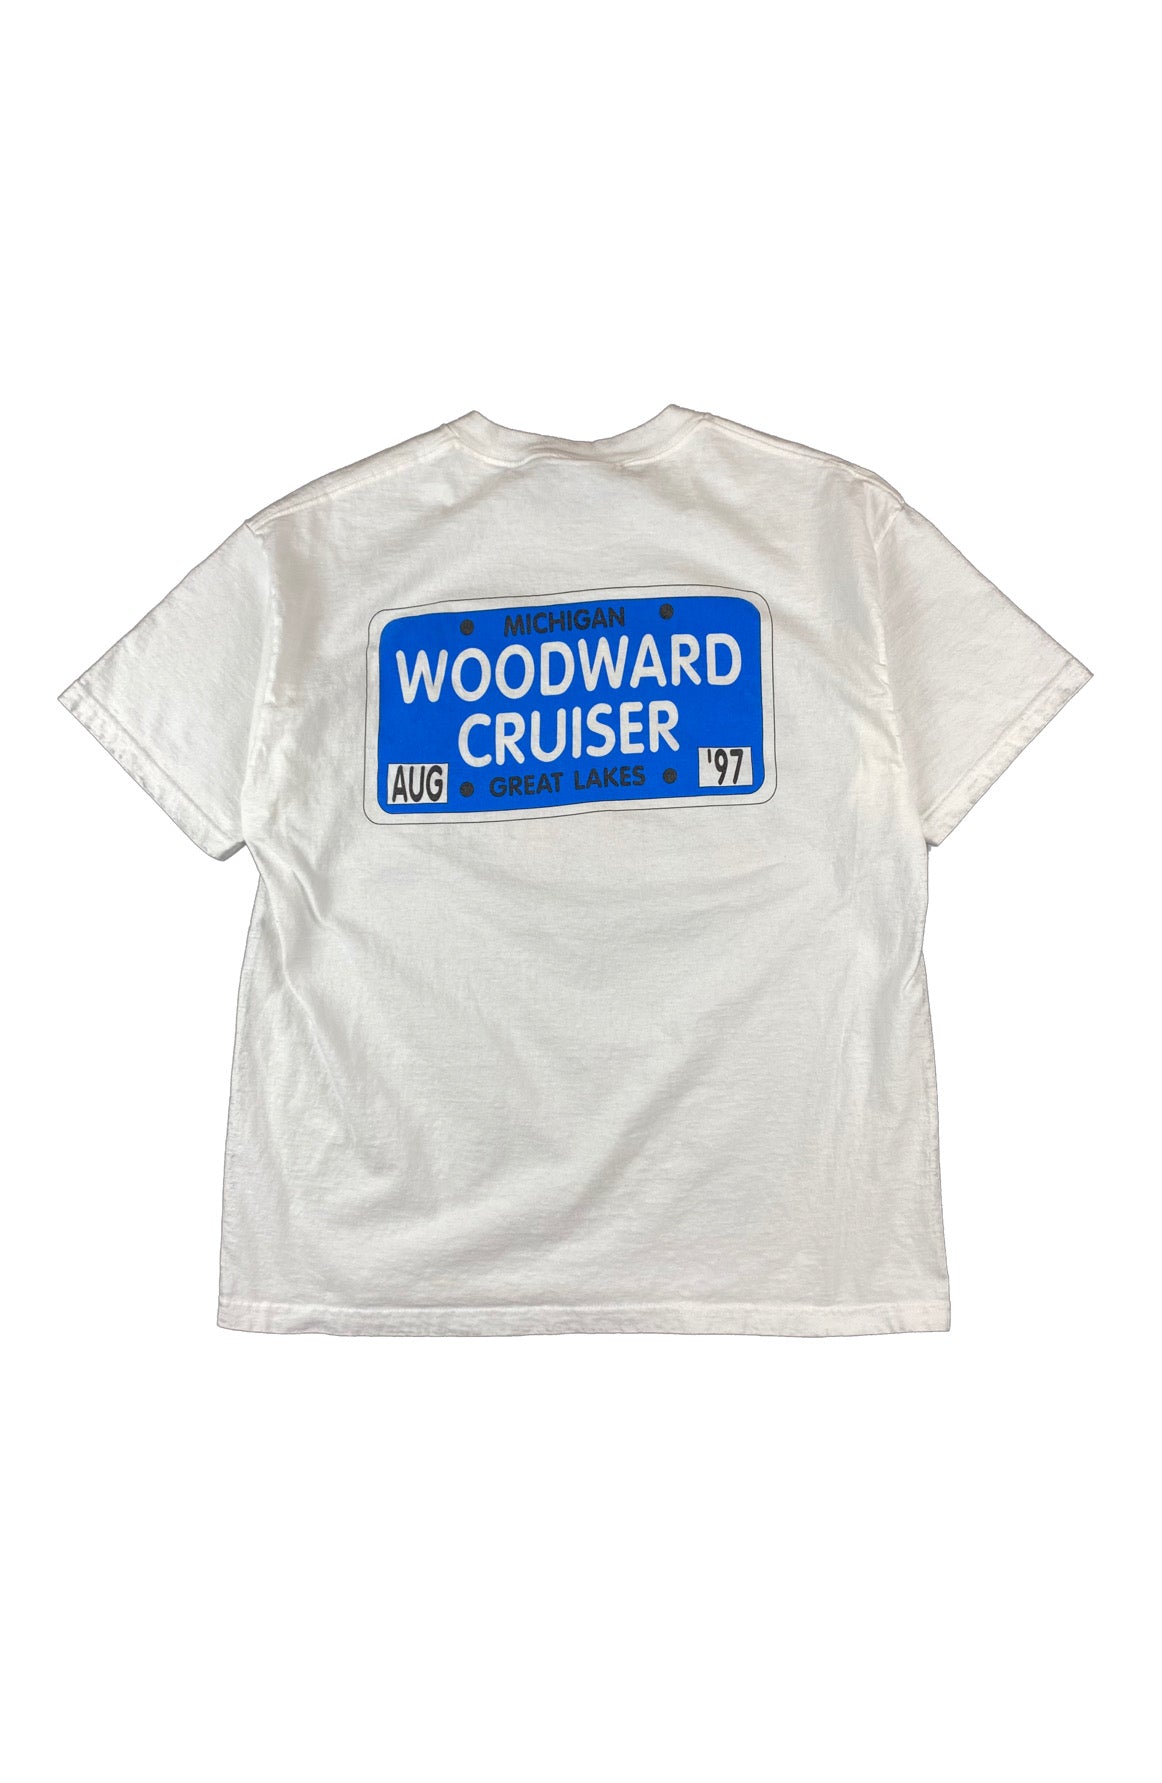 1997 Woodward Cruiser Classic Car Tee •Large